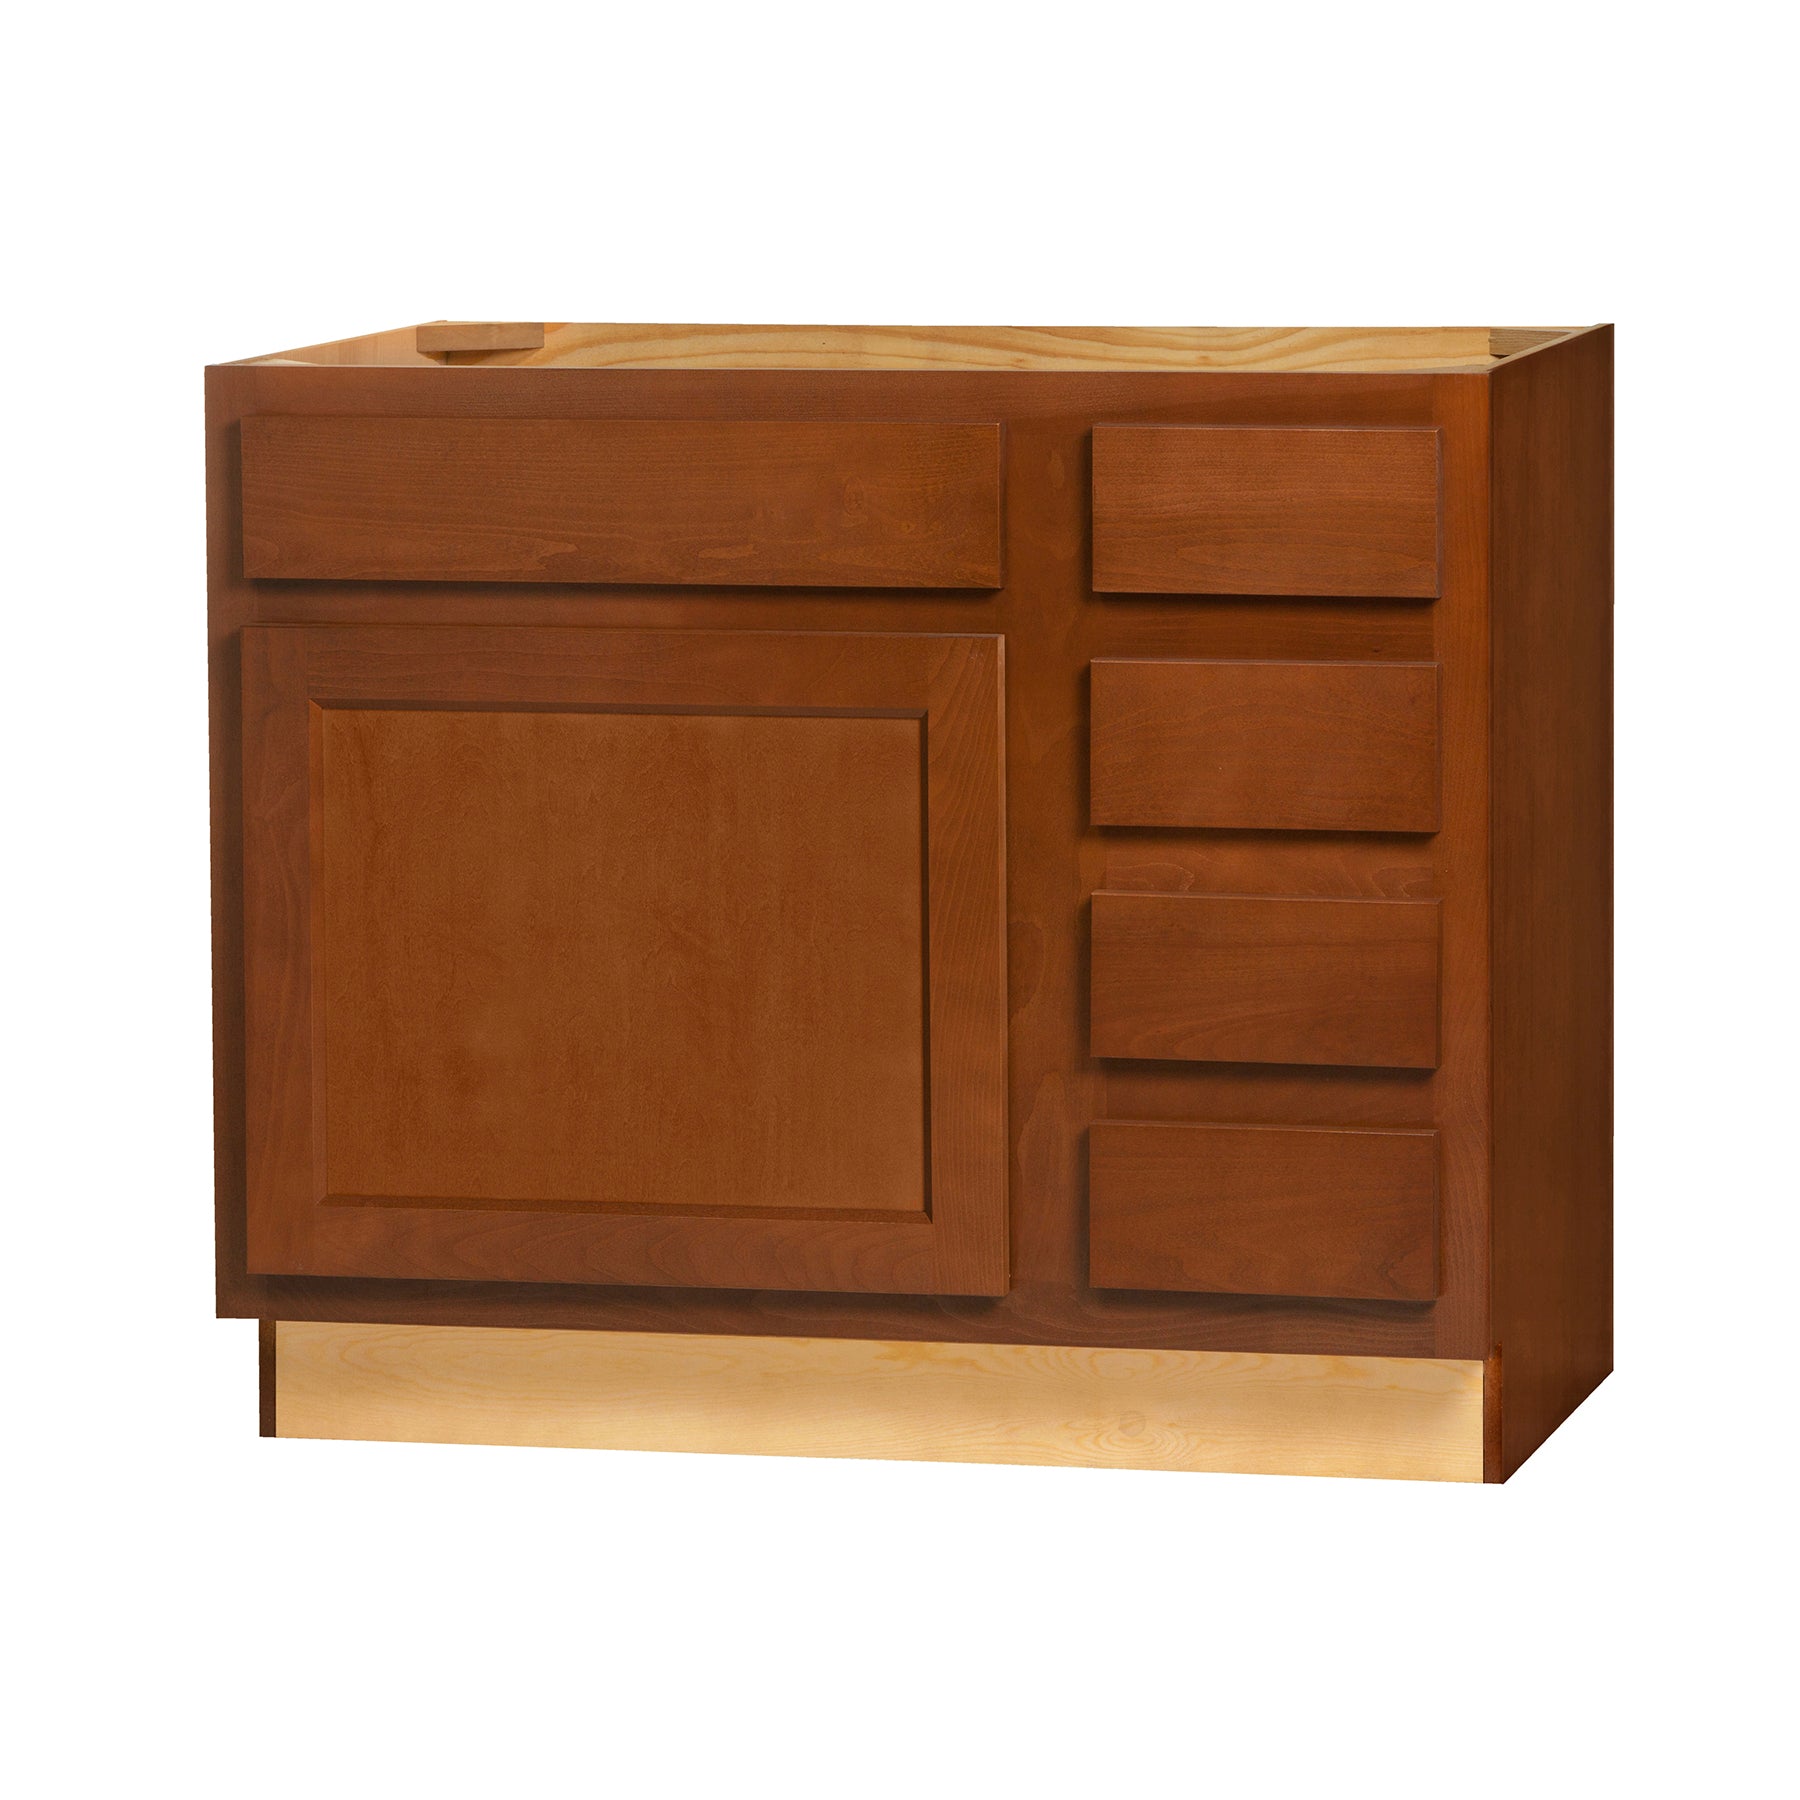 30.5 Inch High Vanity Cabinet - Glenwood Shaker - 36 Inch W x 30.5 Inch H x 21 Inch D